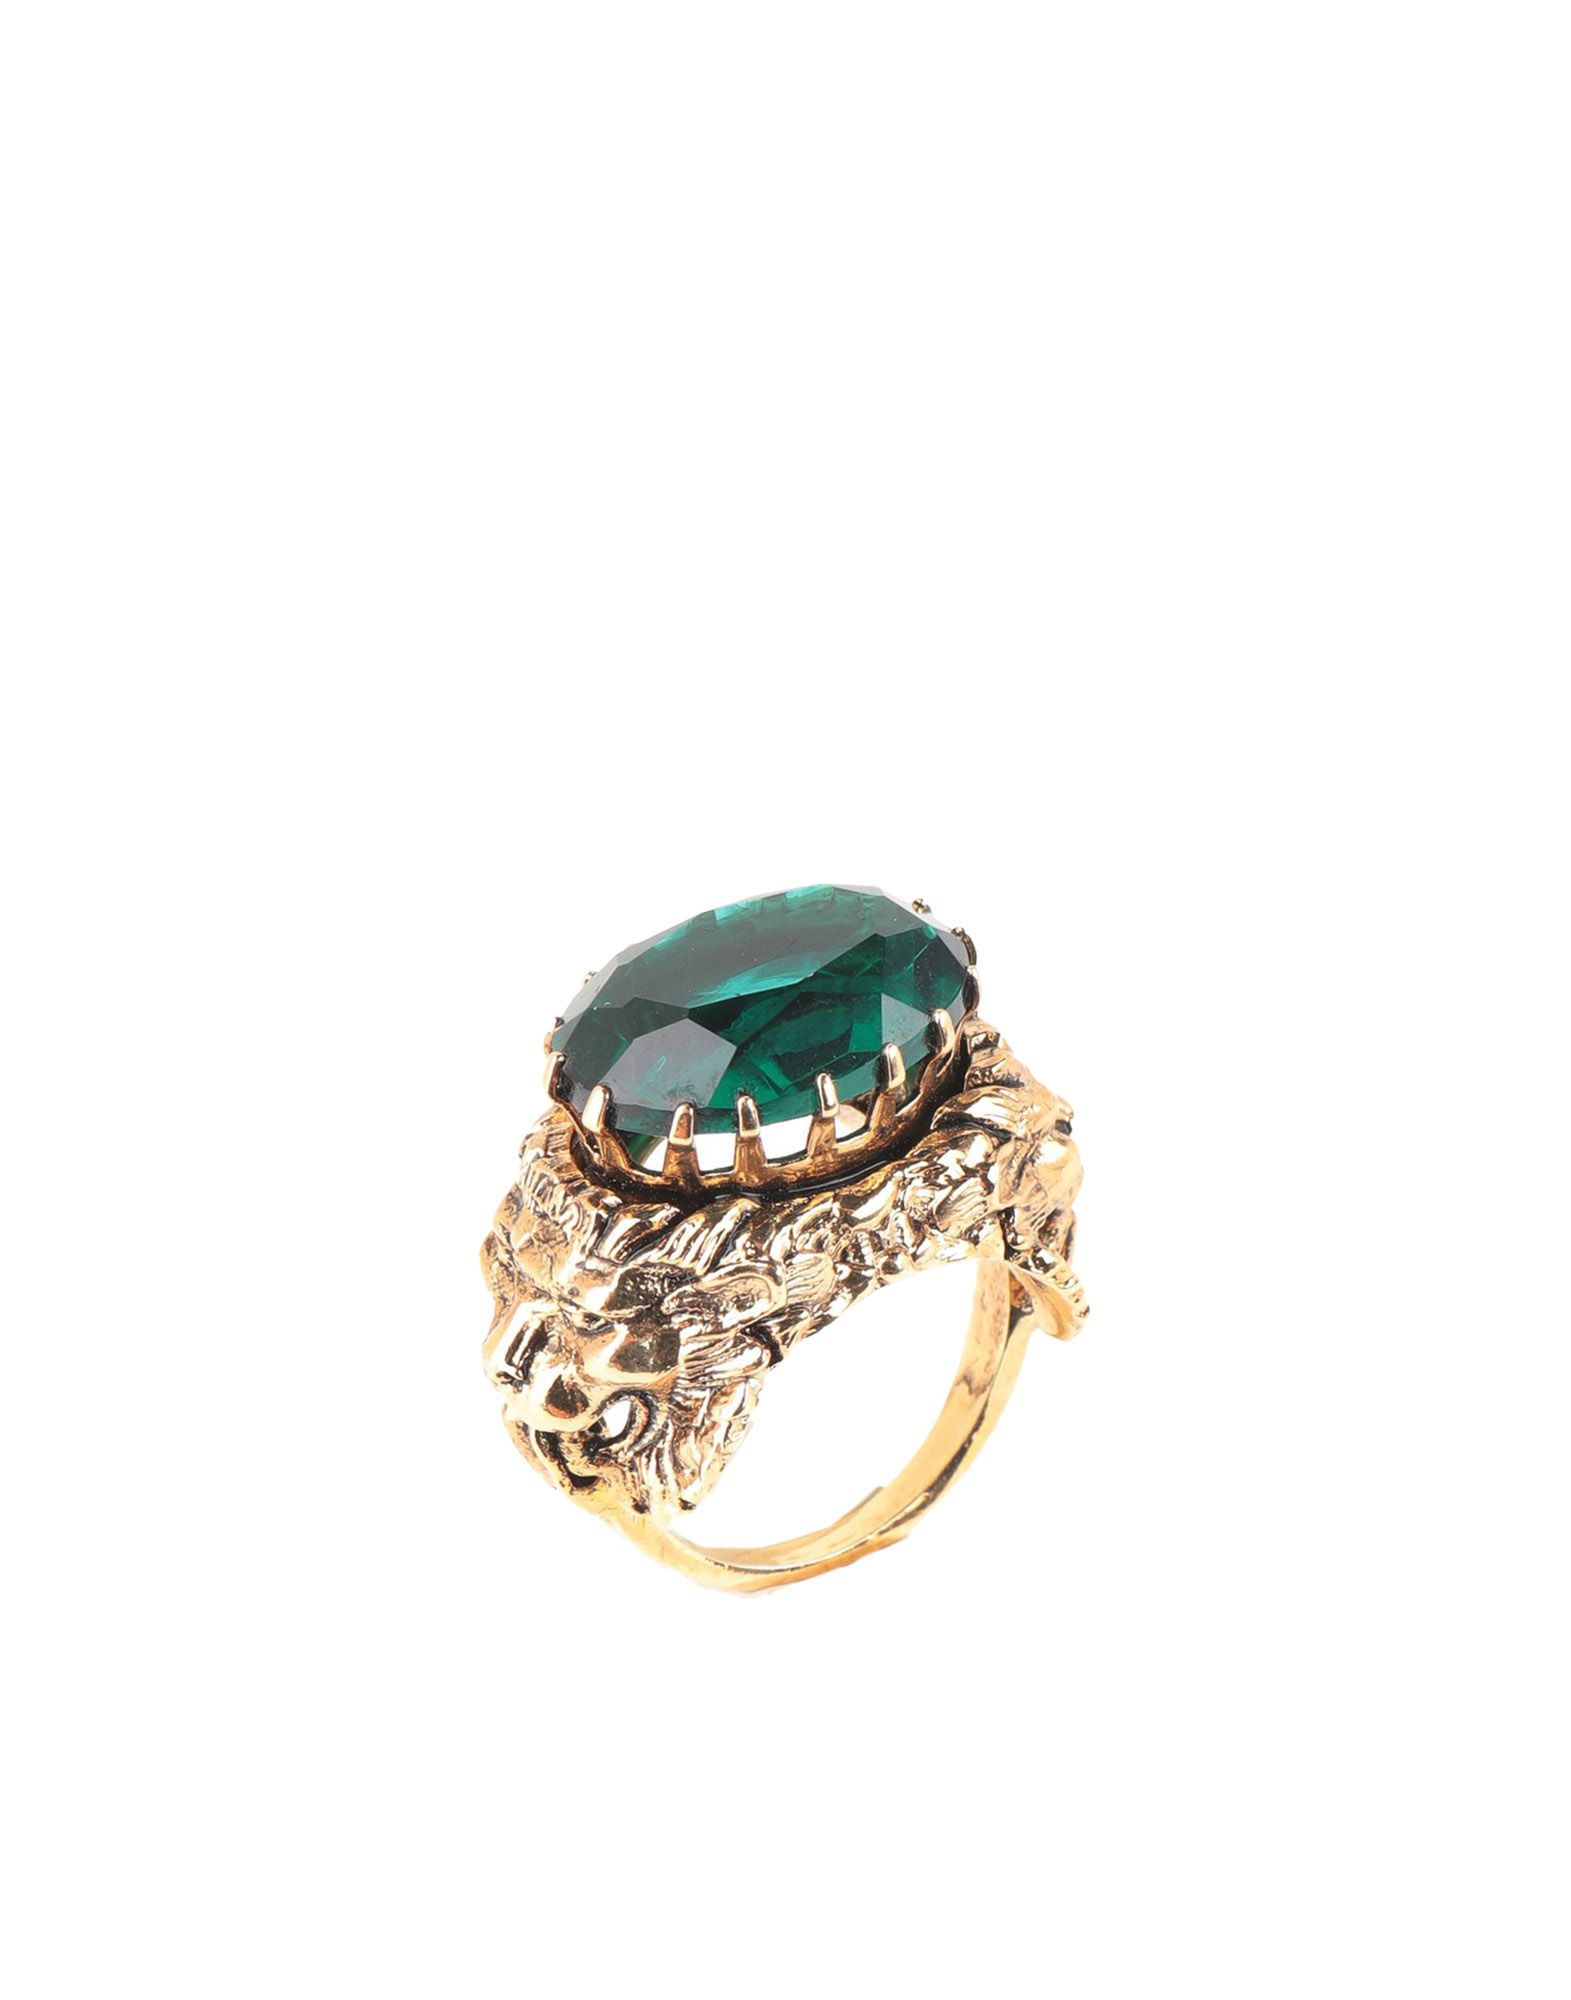 Thot Gioielli Ring In Emerald Green